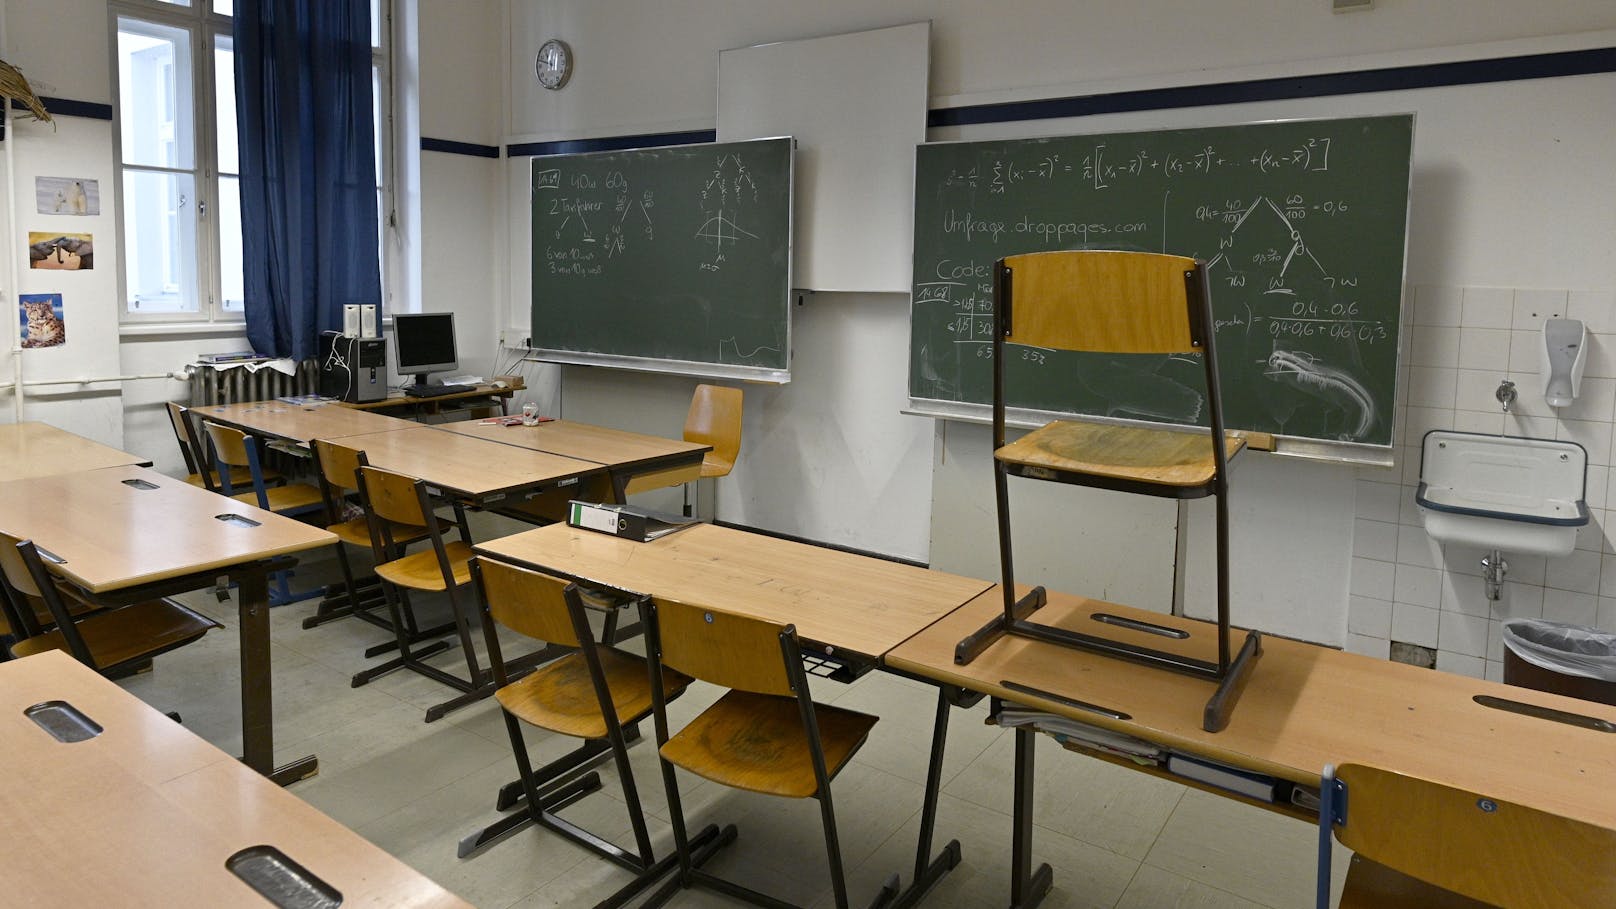 93 Schulklassen sind derzeit in Wien wegen Corona-Fällen geschlossen werden.